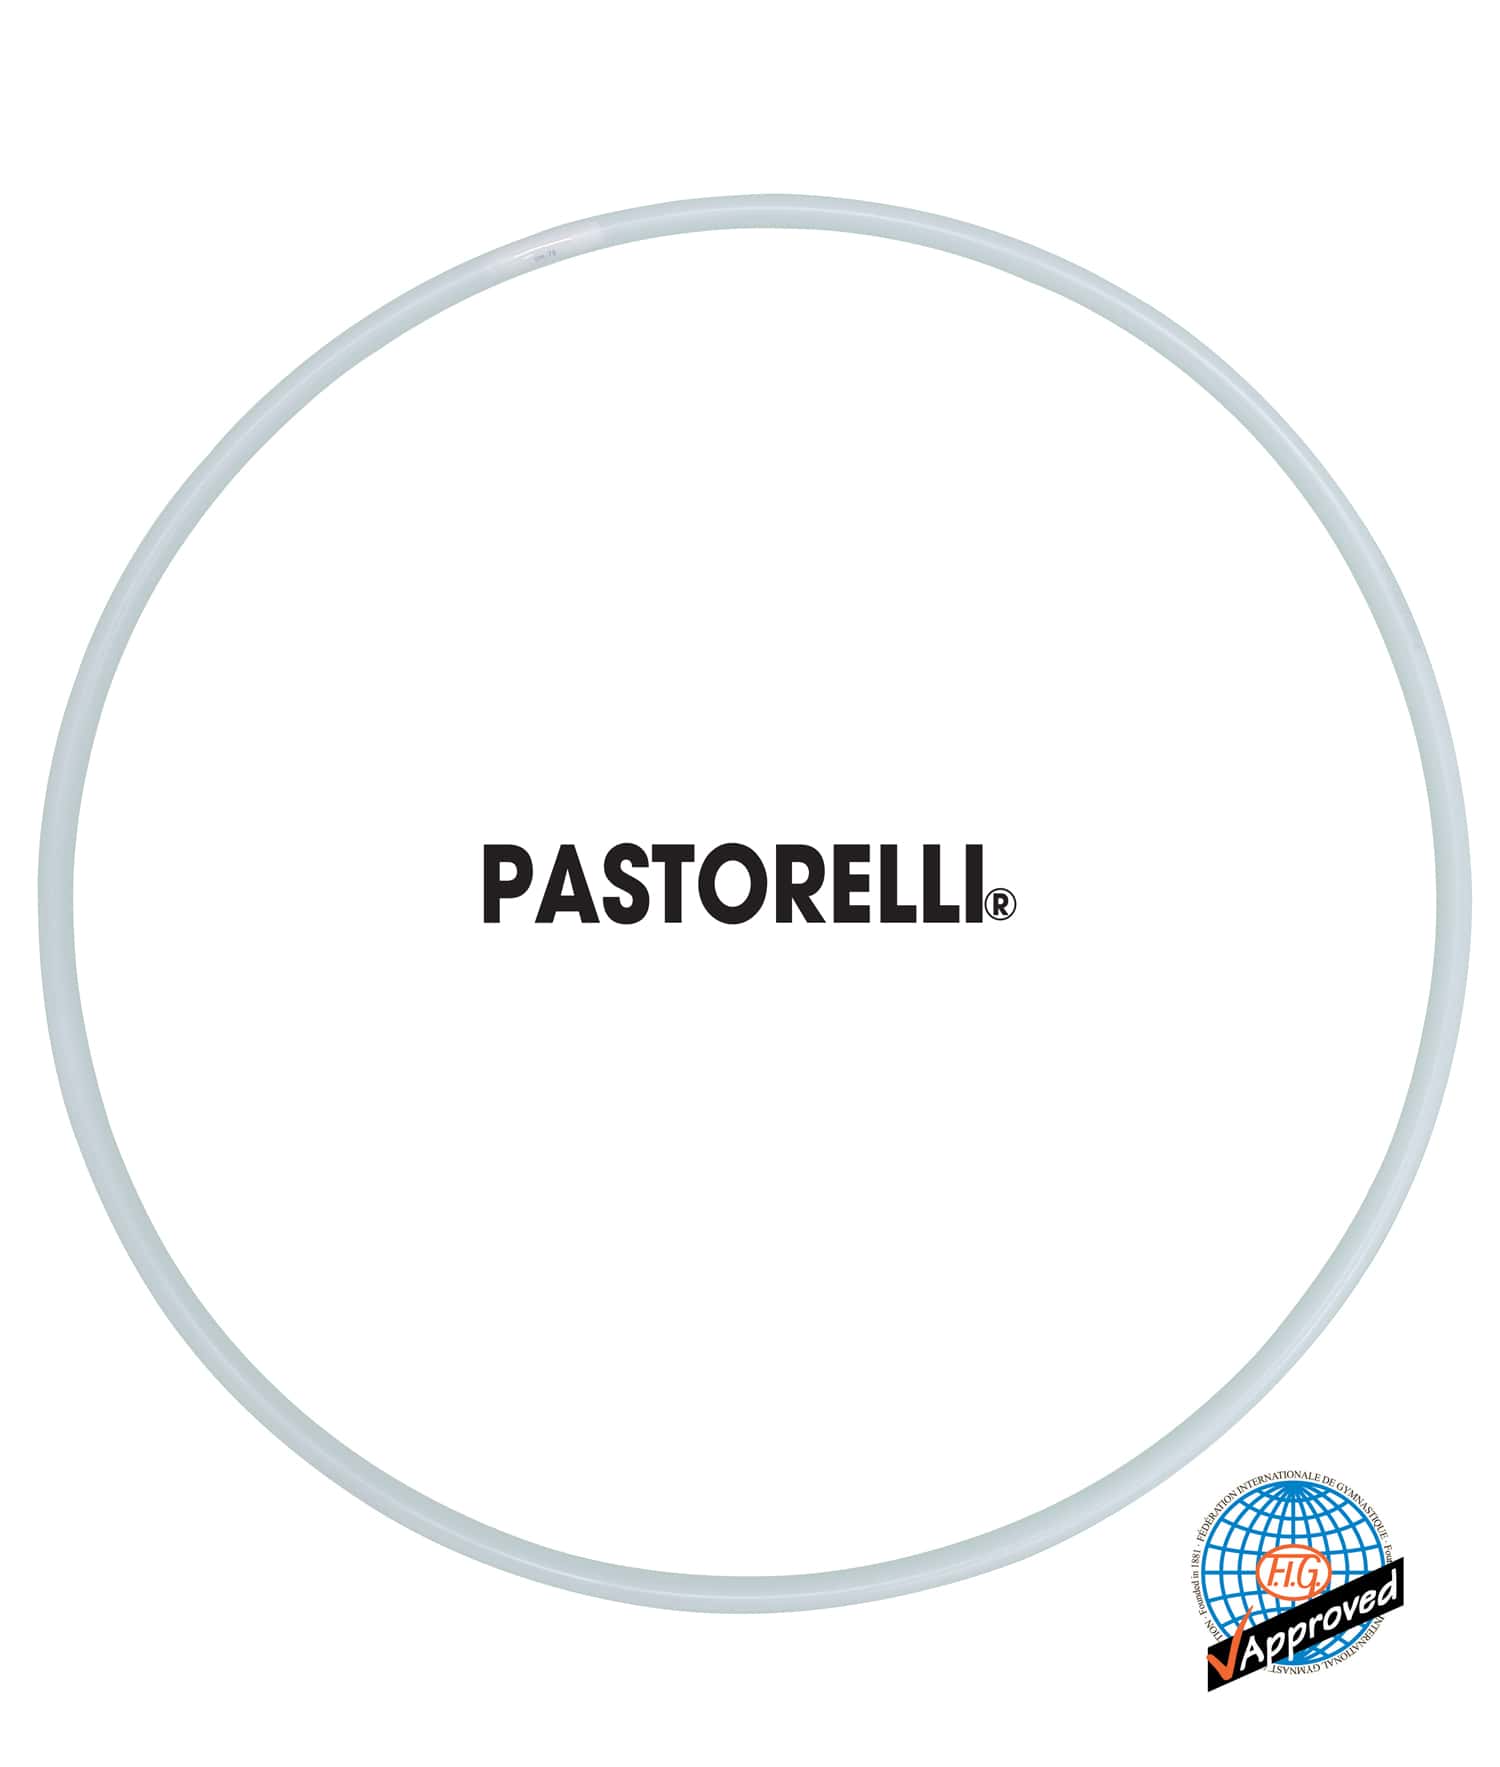 PASTORELLI - Pastorelli Rodeo Rhythmic Gymnastic Hoop (Laser logo FIG approved)